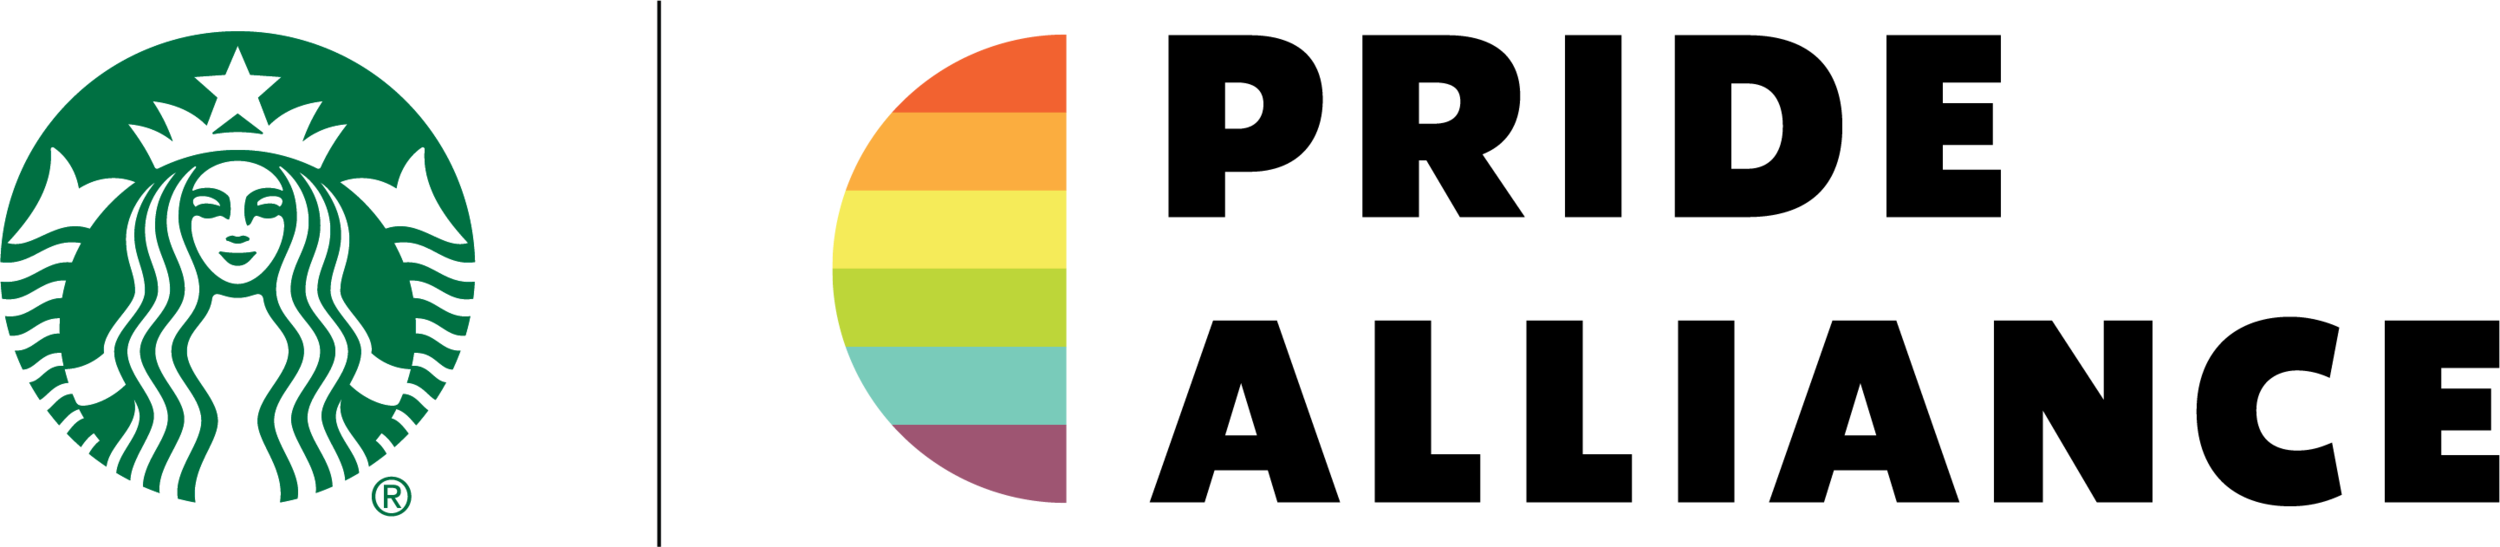 Pride Alliance Logo - Siren Lockup Black (1).png